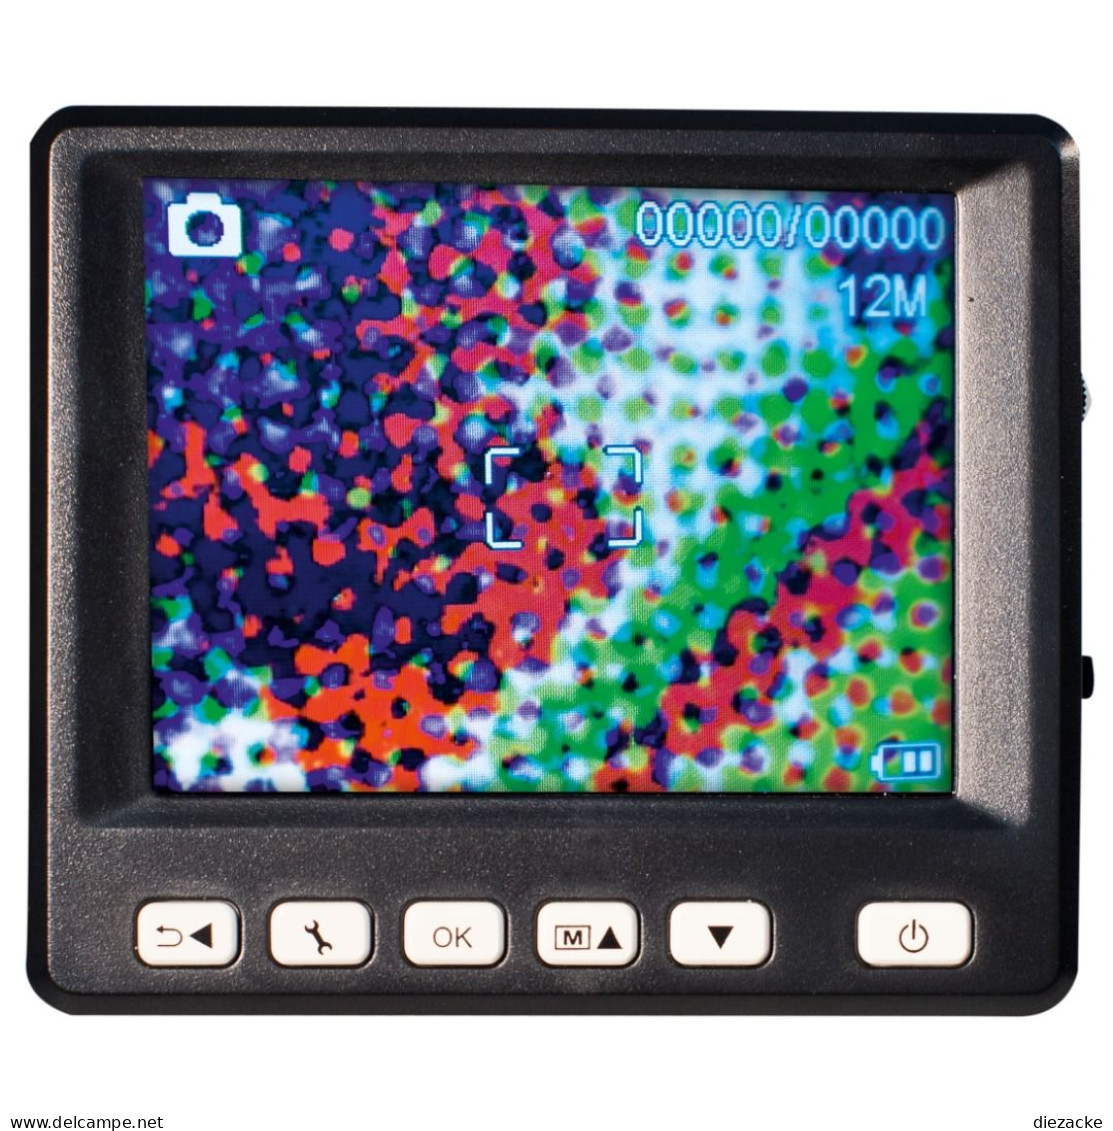 Leuchtturm LCD-Digitalmikroskop DM 3 346680 Neu ( - Stamp Tongs, Magnifiers And Microscopes